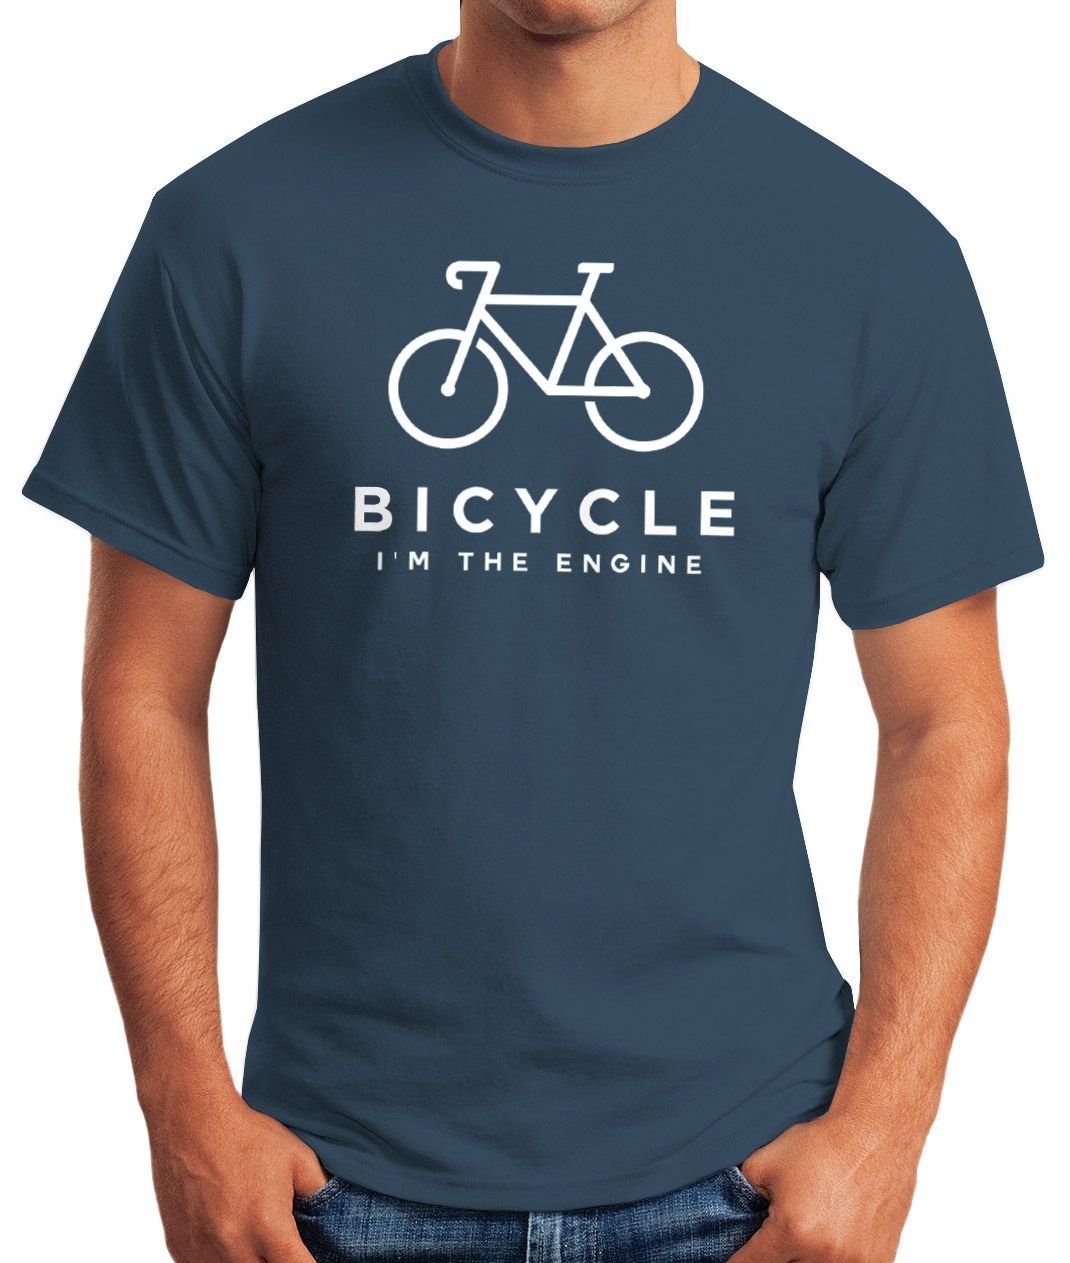 Print-Shirt Engine MoonWorks Moonworks® Fun-Shirt mit lustig Sprüche blau Herren Spruch Print Bicycle Fahrrad I'm T-Shirt Rad Bike the